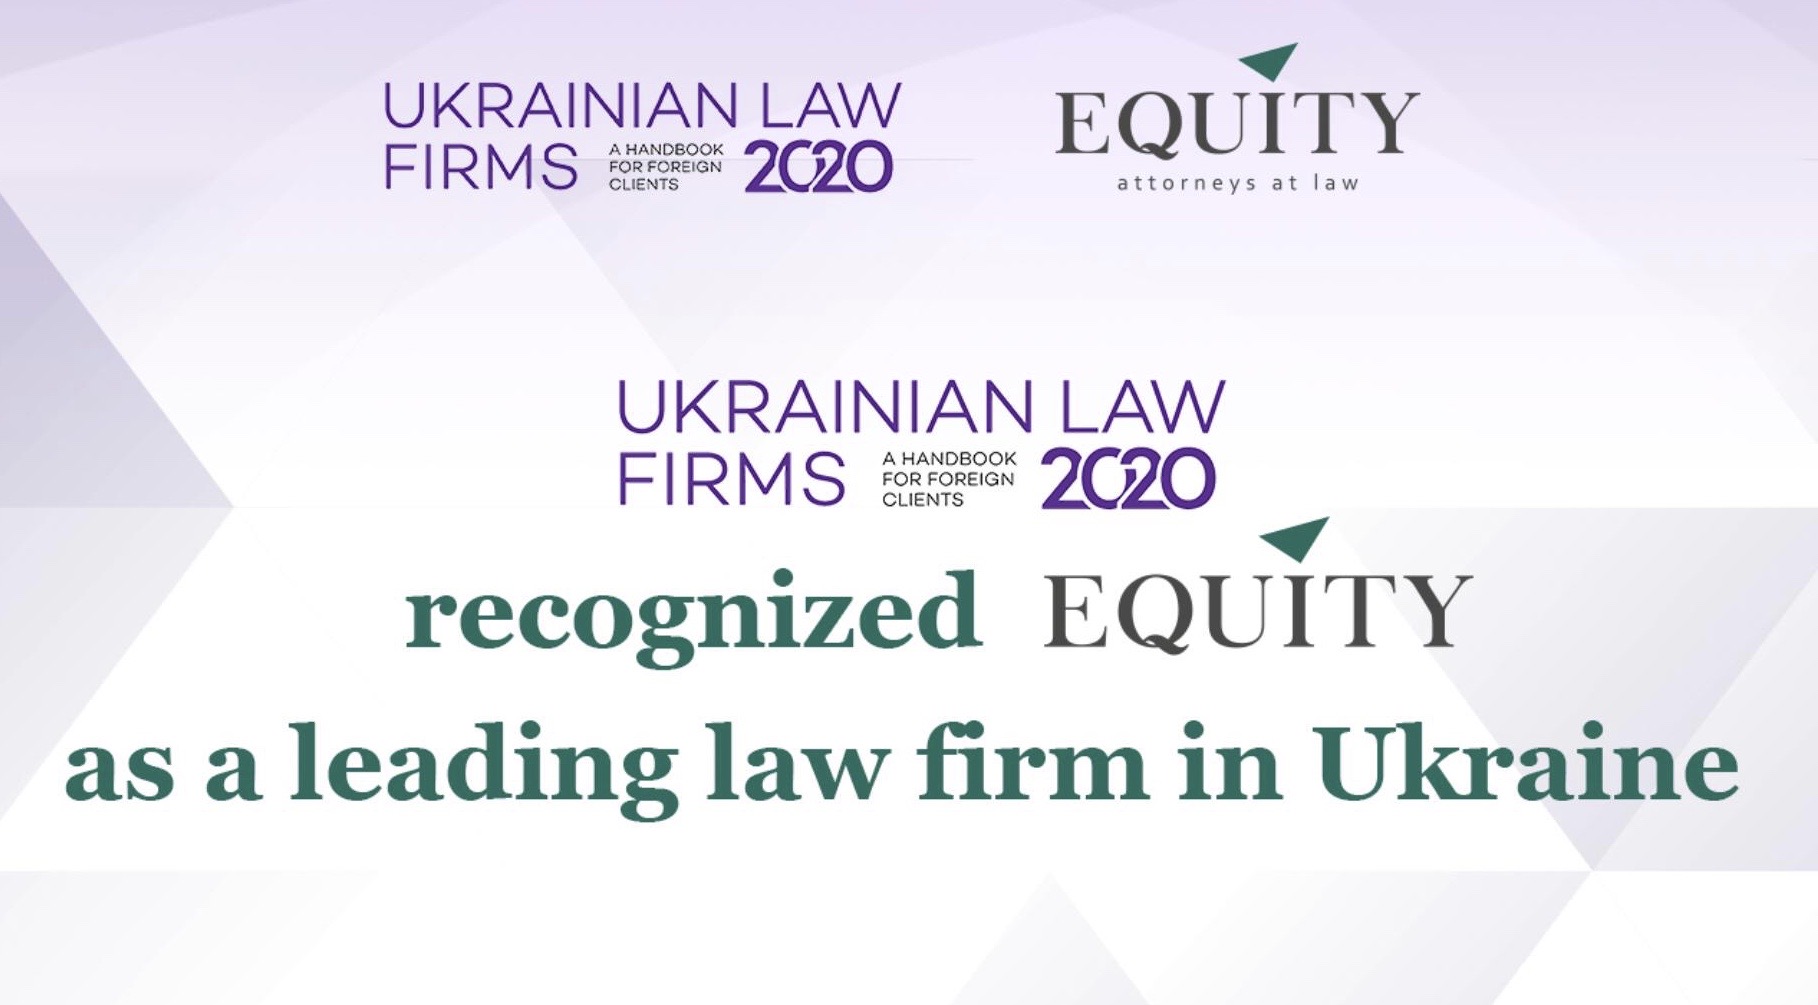 EQUITY визнана рейтингом Ukrainian Law Firms 2020: a Handbook For Foreign Clients.